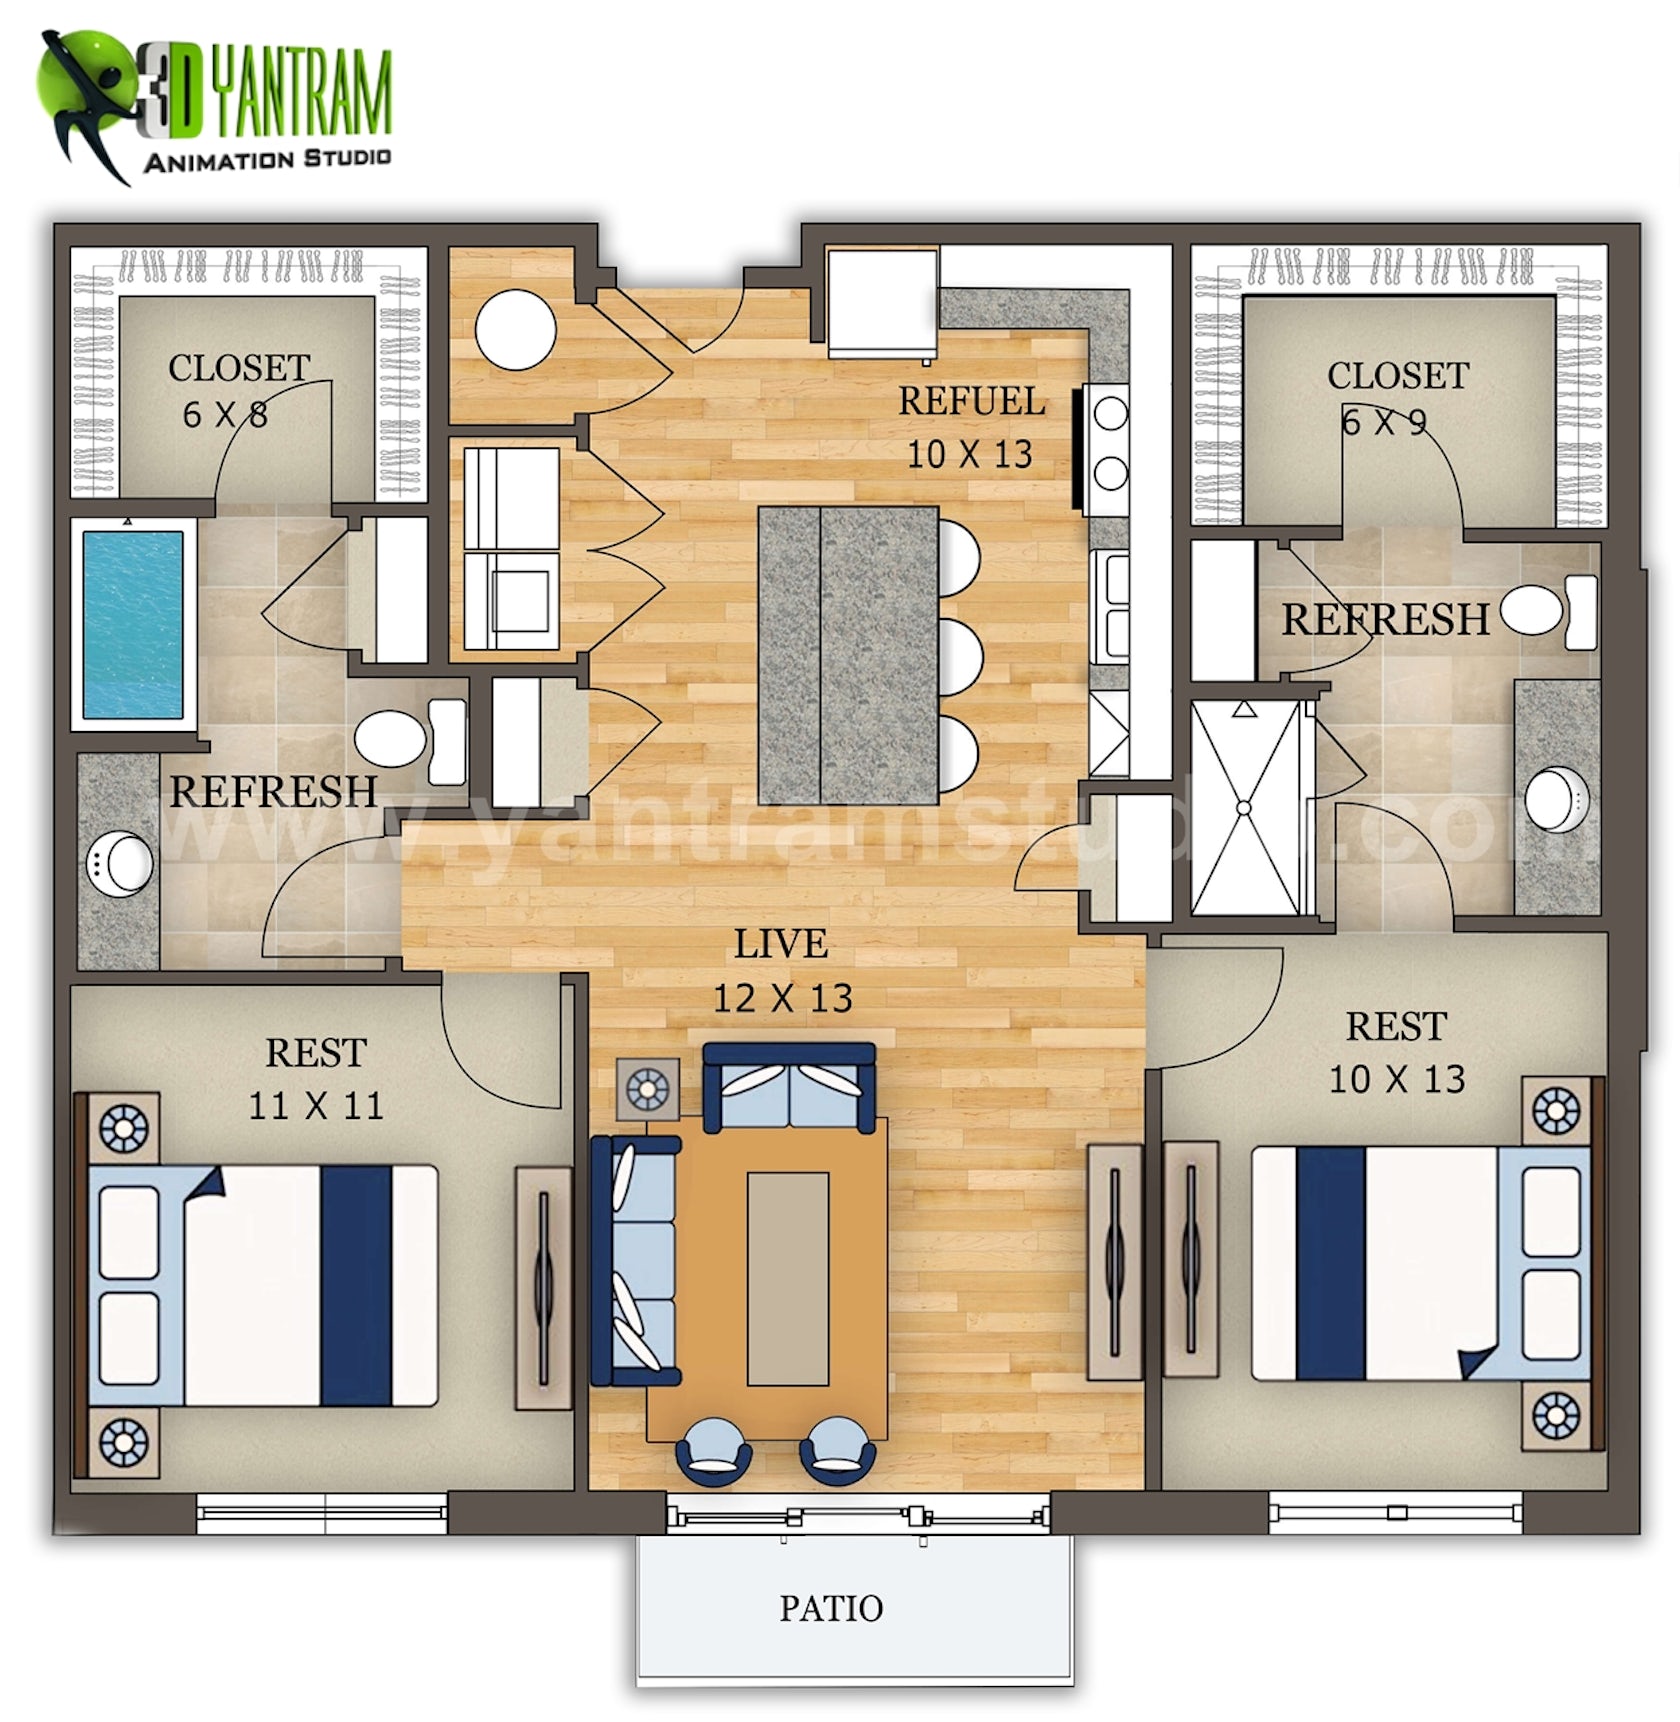 House Floor Plan Design by Yantram Architectural Visualisation Studio